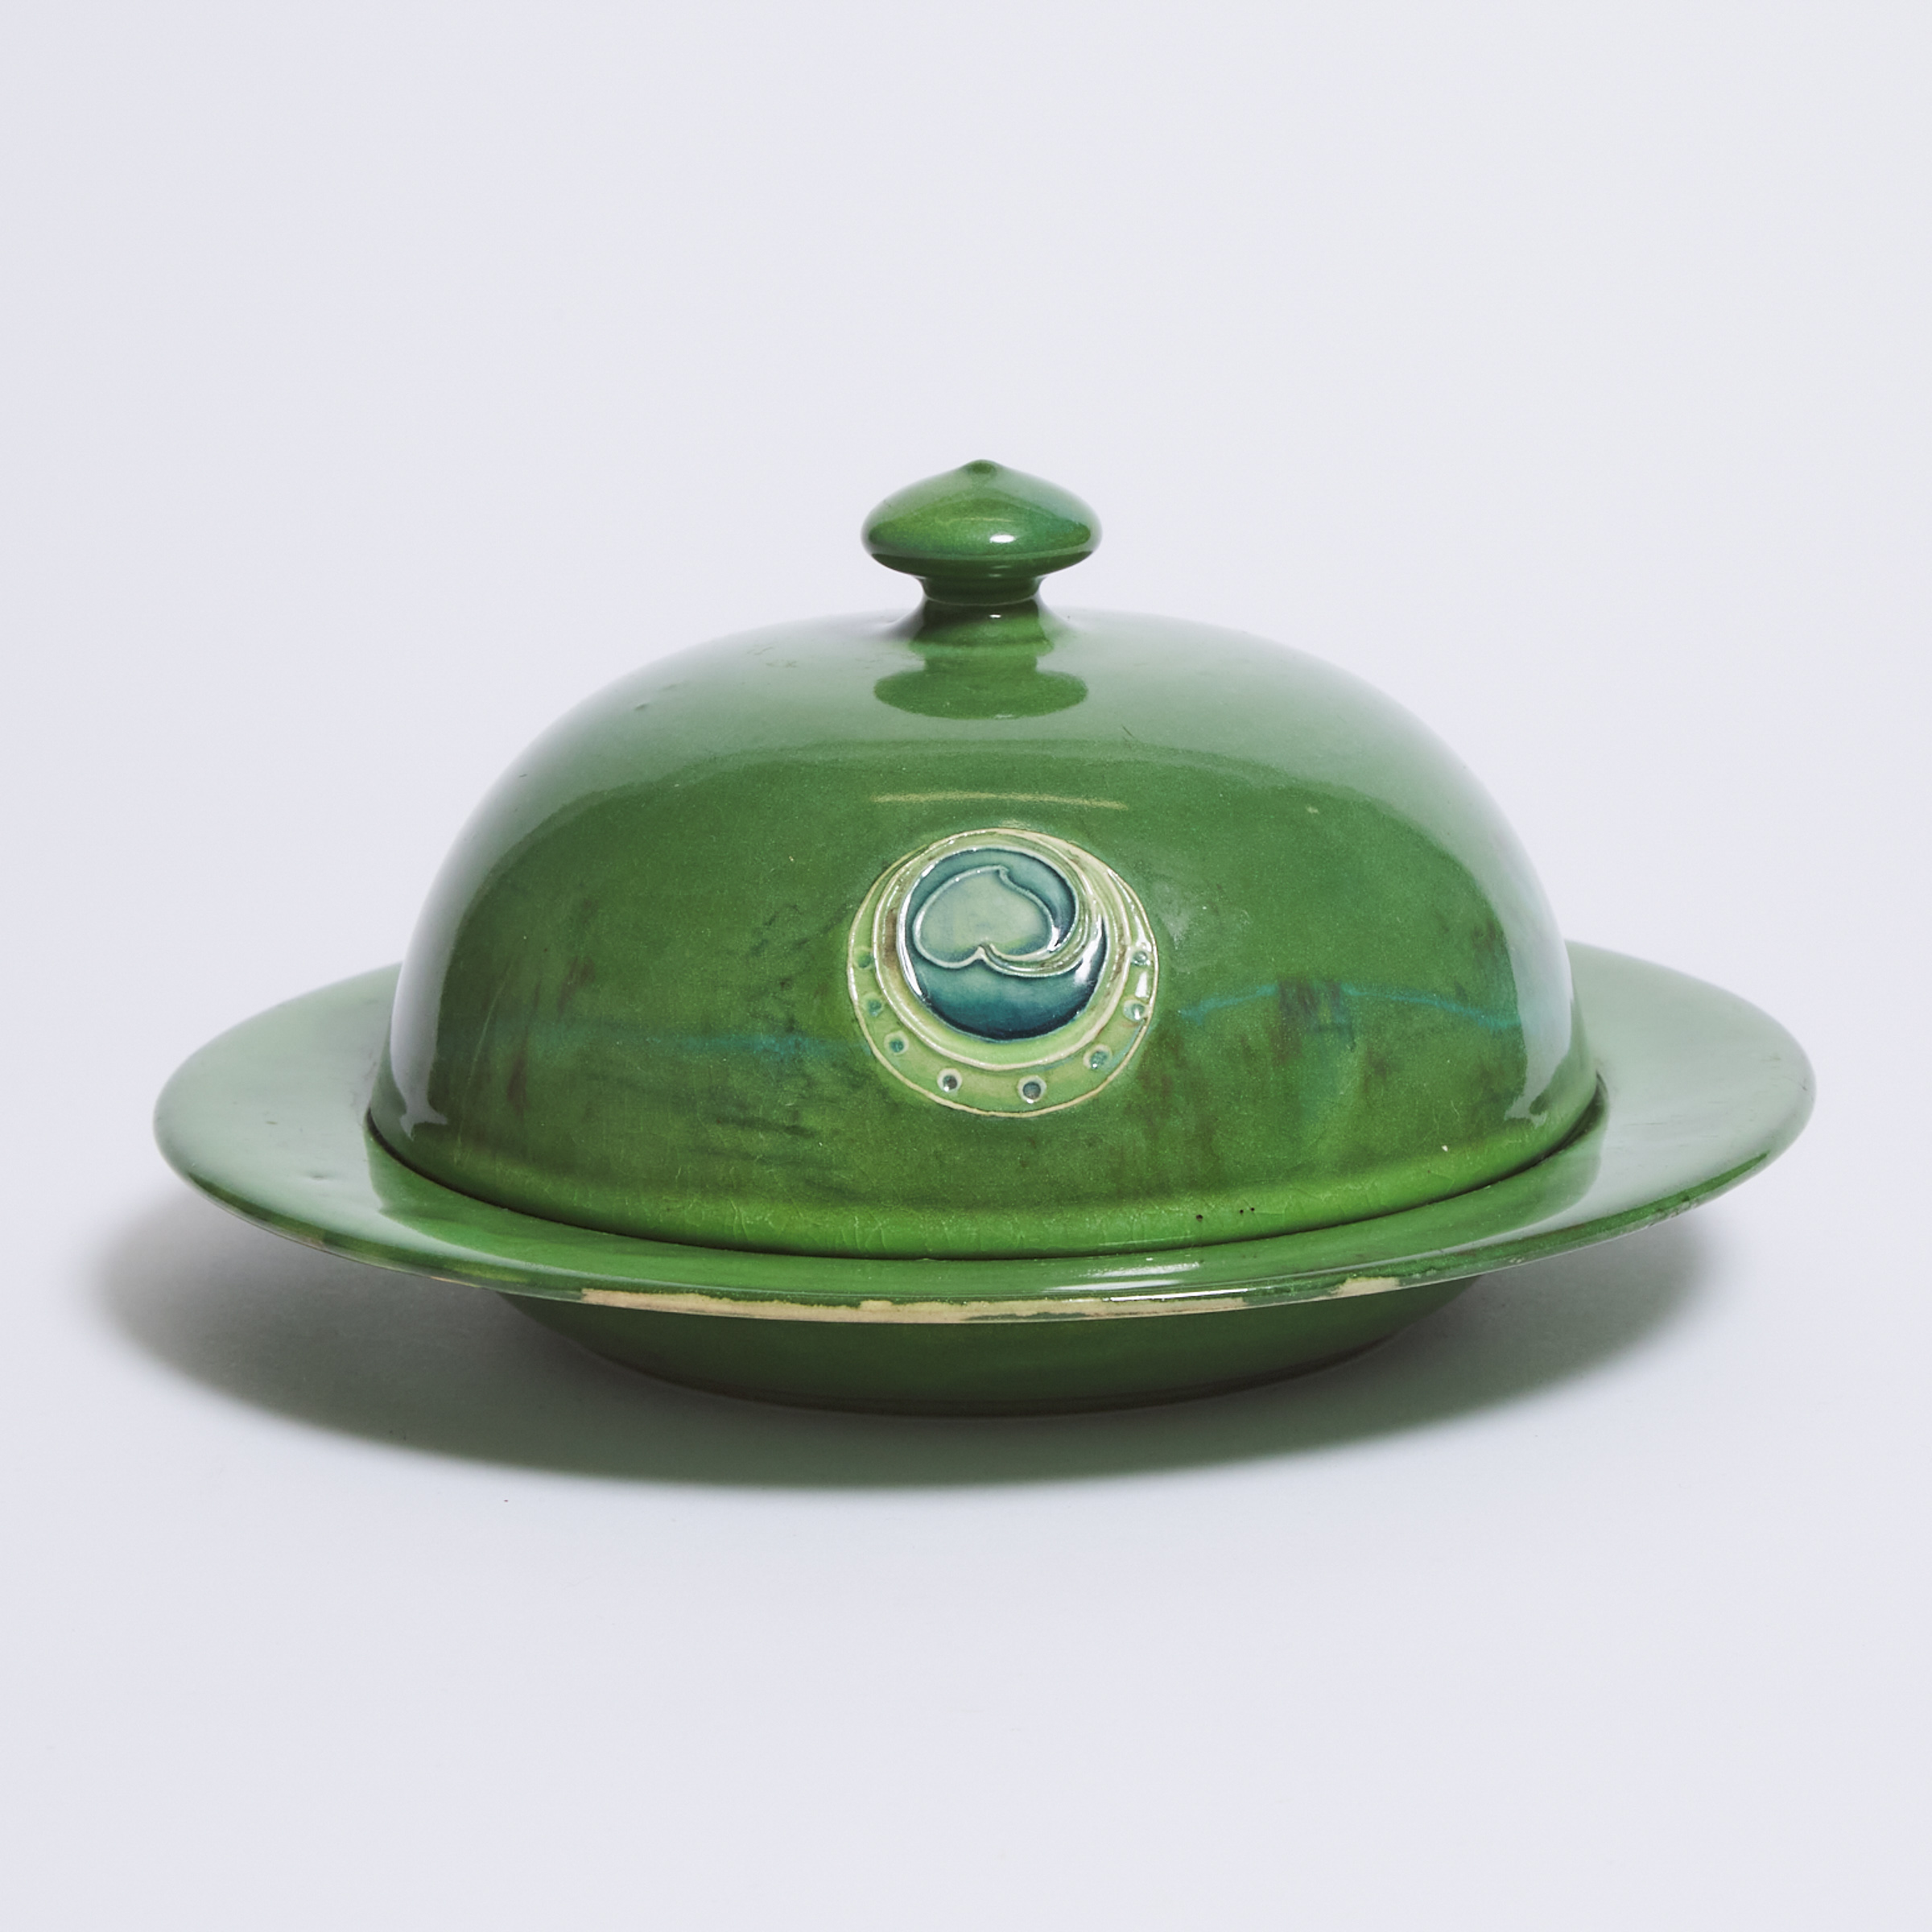 Macintyre Moorcroft Green Flamminian Covered Muffin Dish, for Liberty & Co., c.1906-13